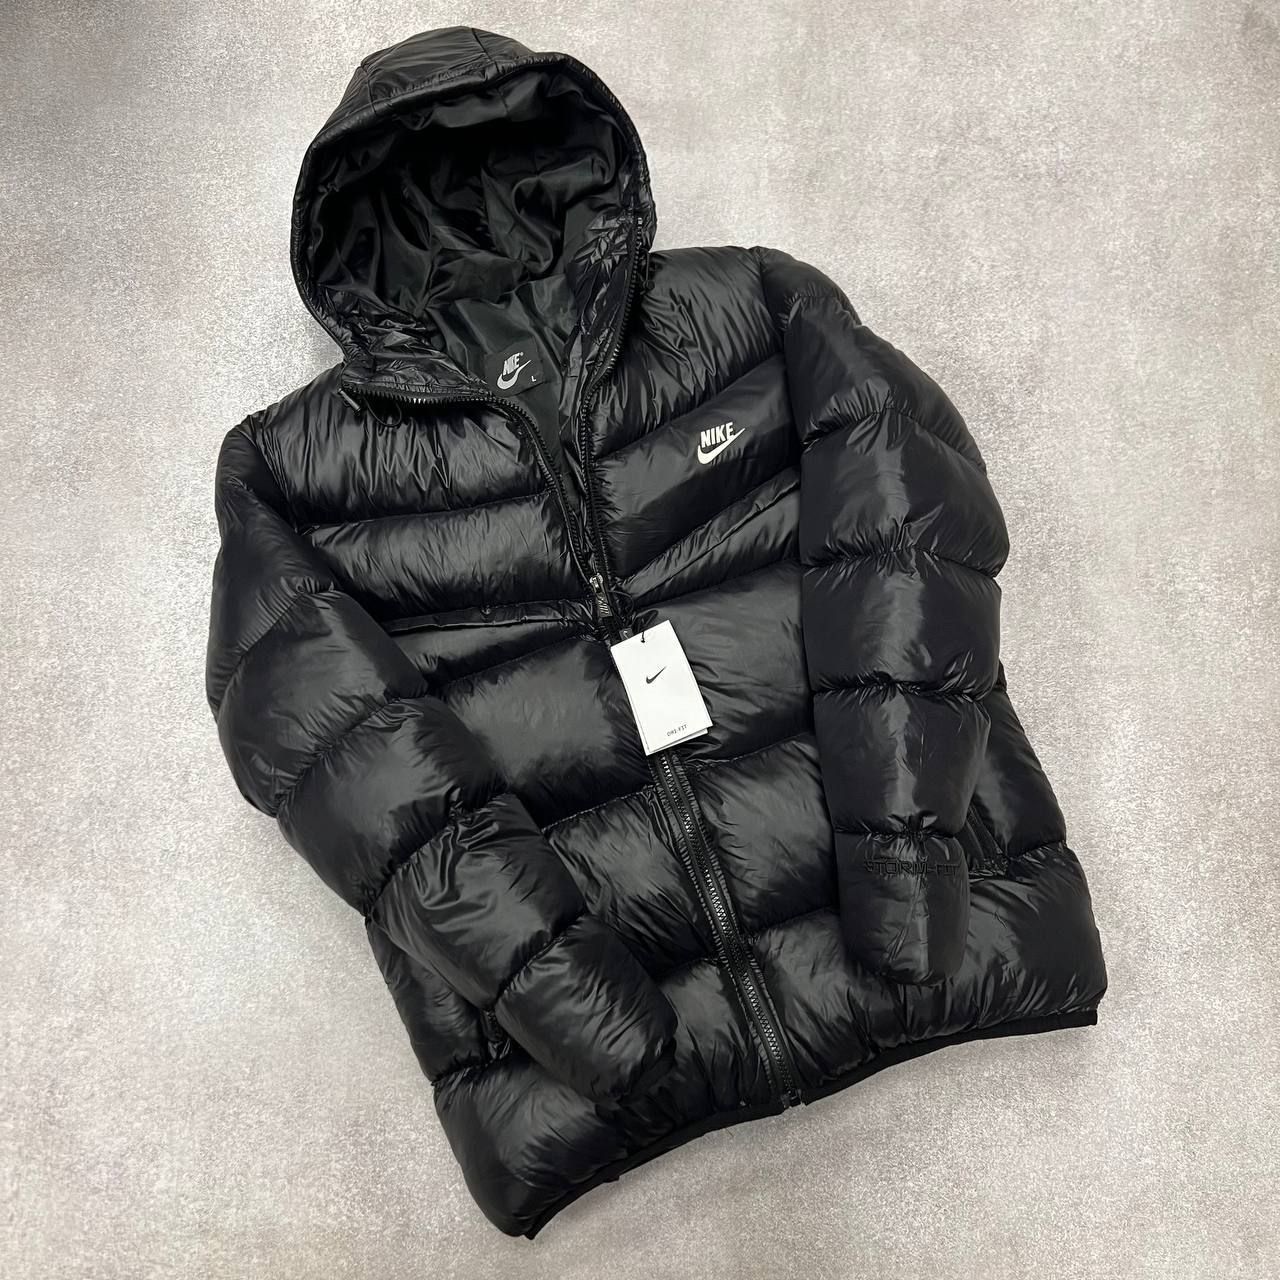 NIKE -60% МУЖСКАЯ Зимняя весенняя куртка черная Унисекс теплая скидка